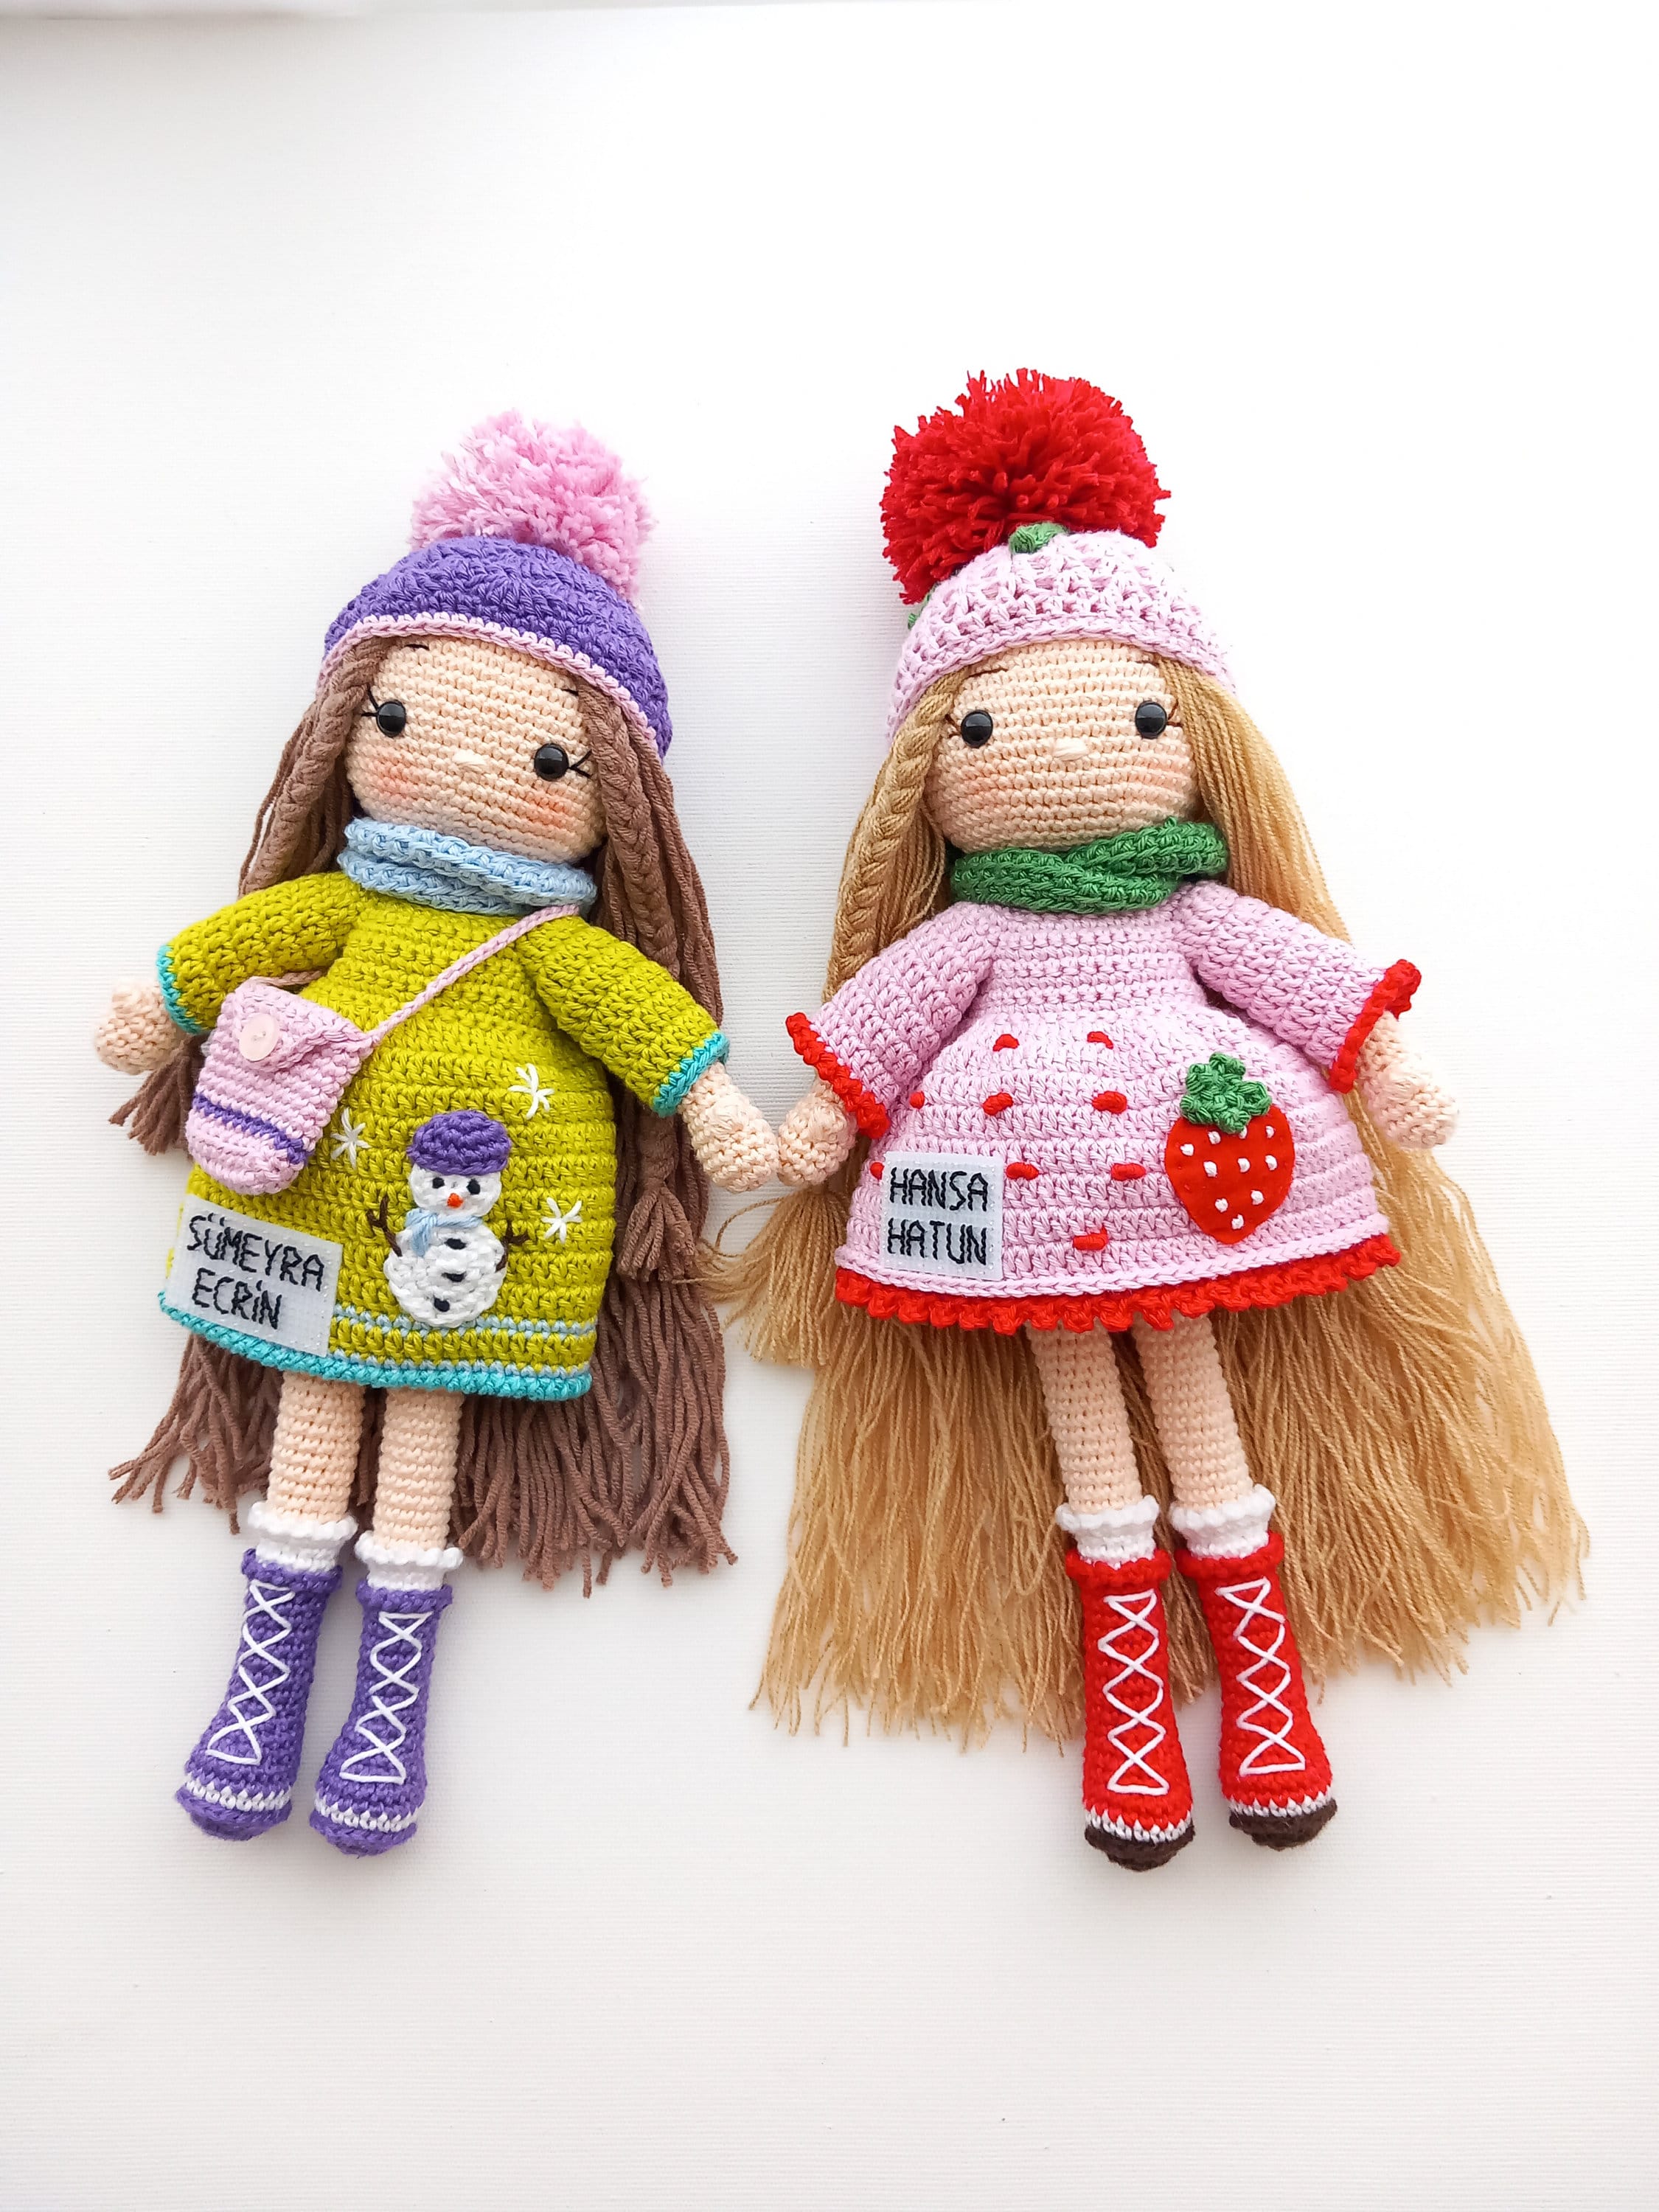 Miniature Wednesday and Enid Crochet Kit, Amigurumi Kit, Miniature Doll Kit  